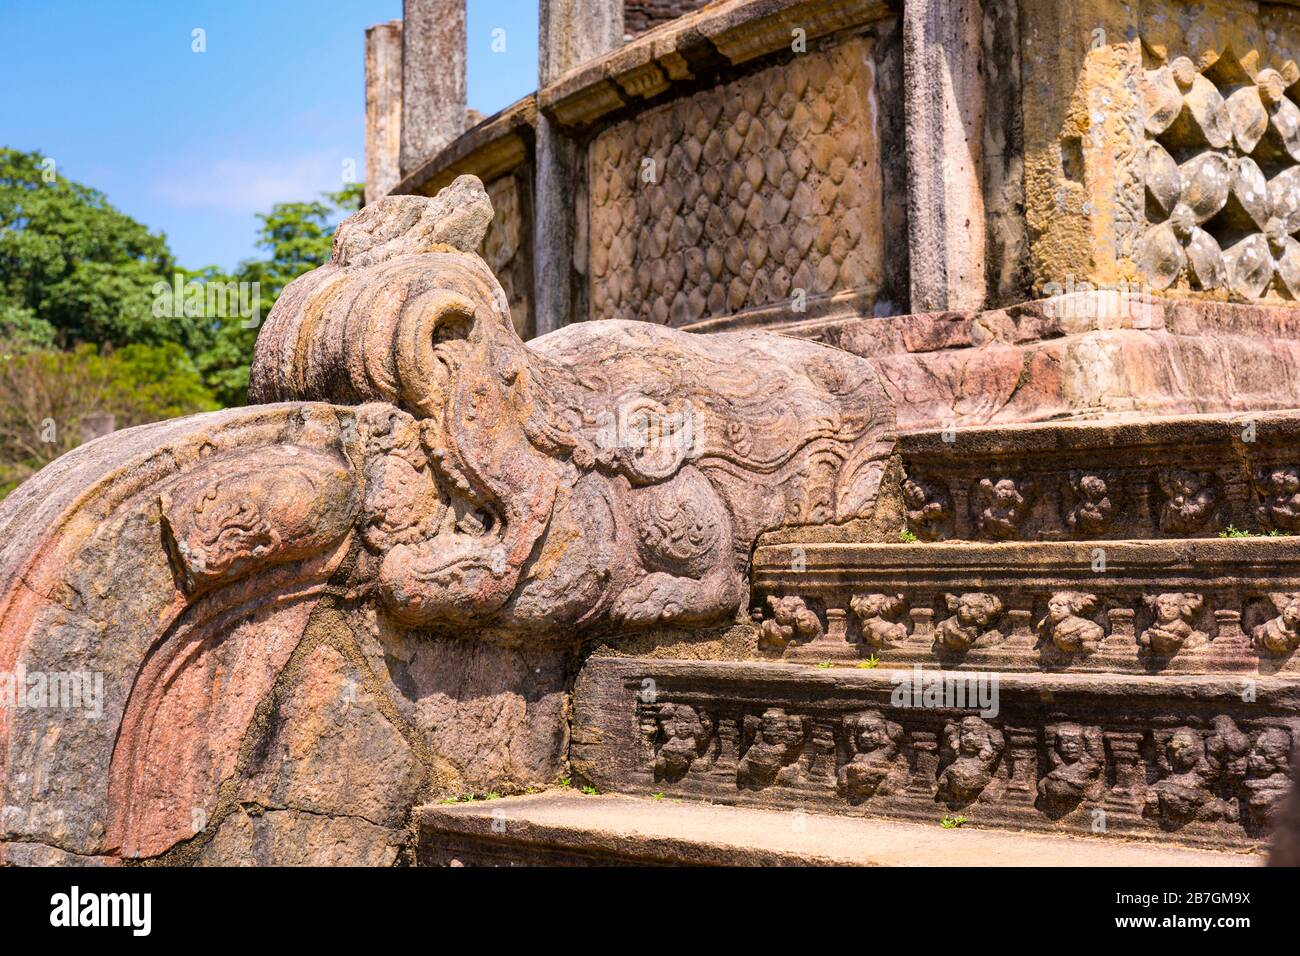 Asia Sri Lanka Polonnaruwa Vatadage staircase balustrade Korawakgala feature dragon 6 animal composite stone Makara Galaeating breathing fire flame Stock Photo